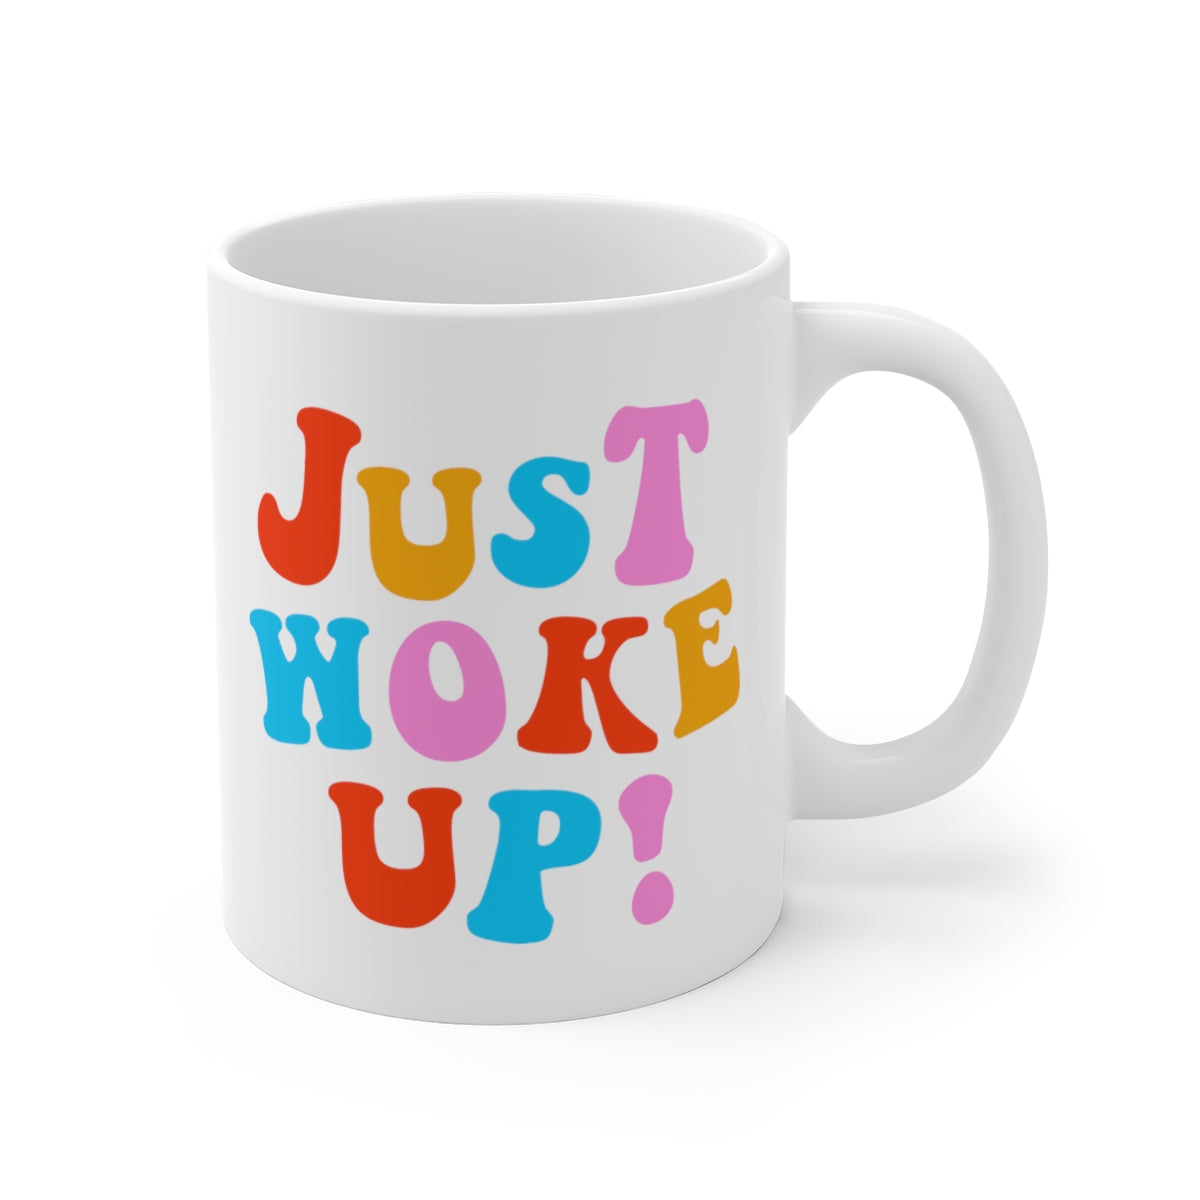 Just Woke Up Coffee Mug